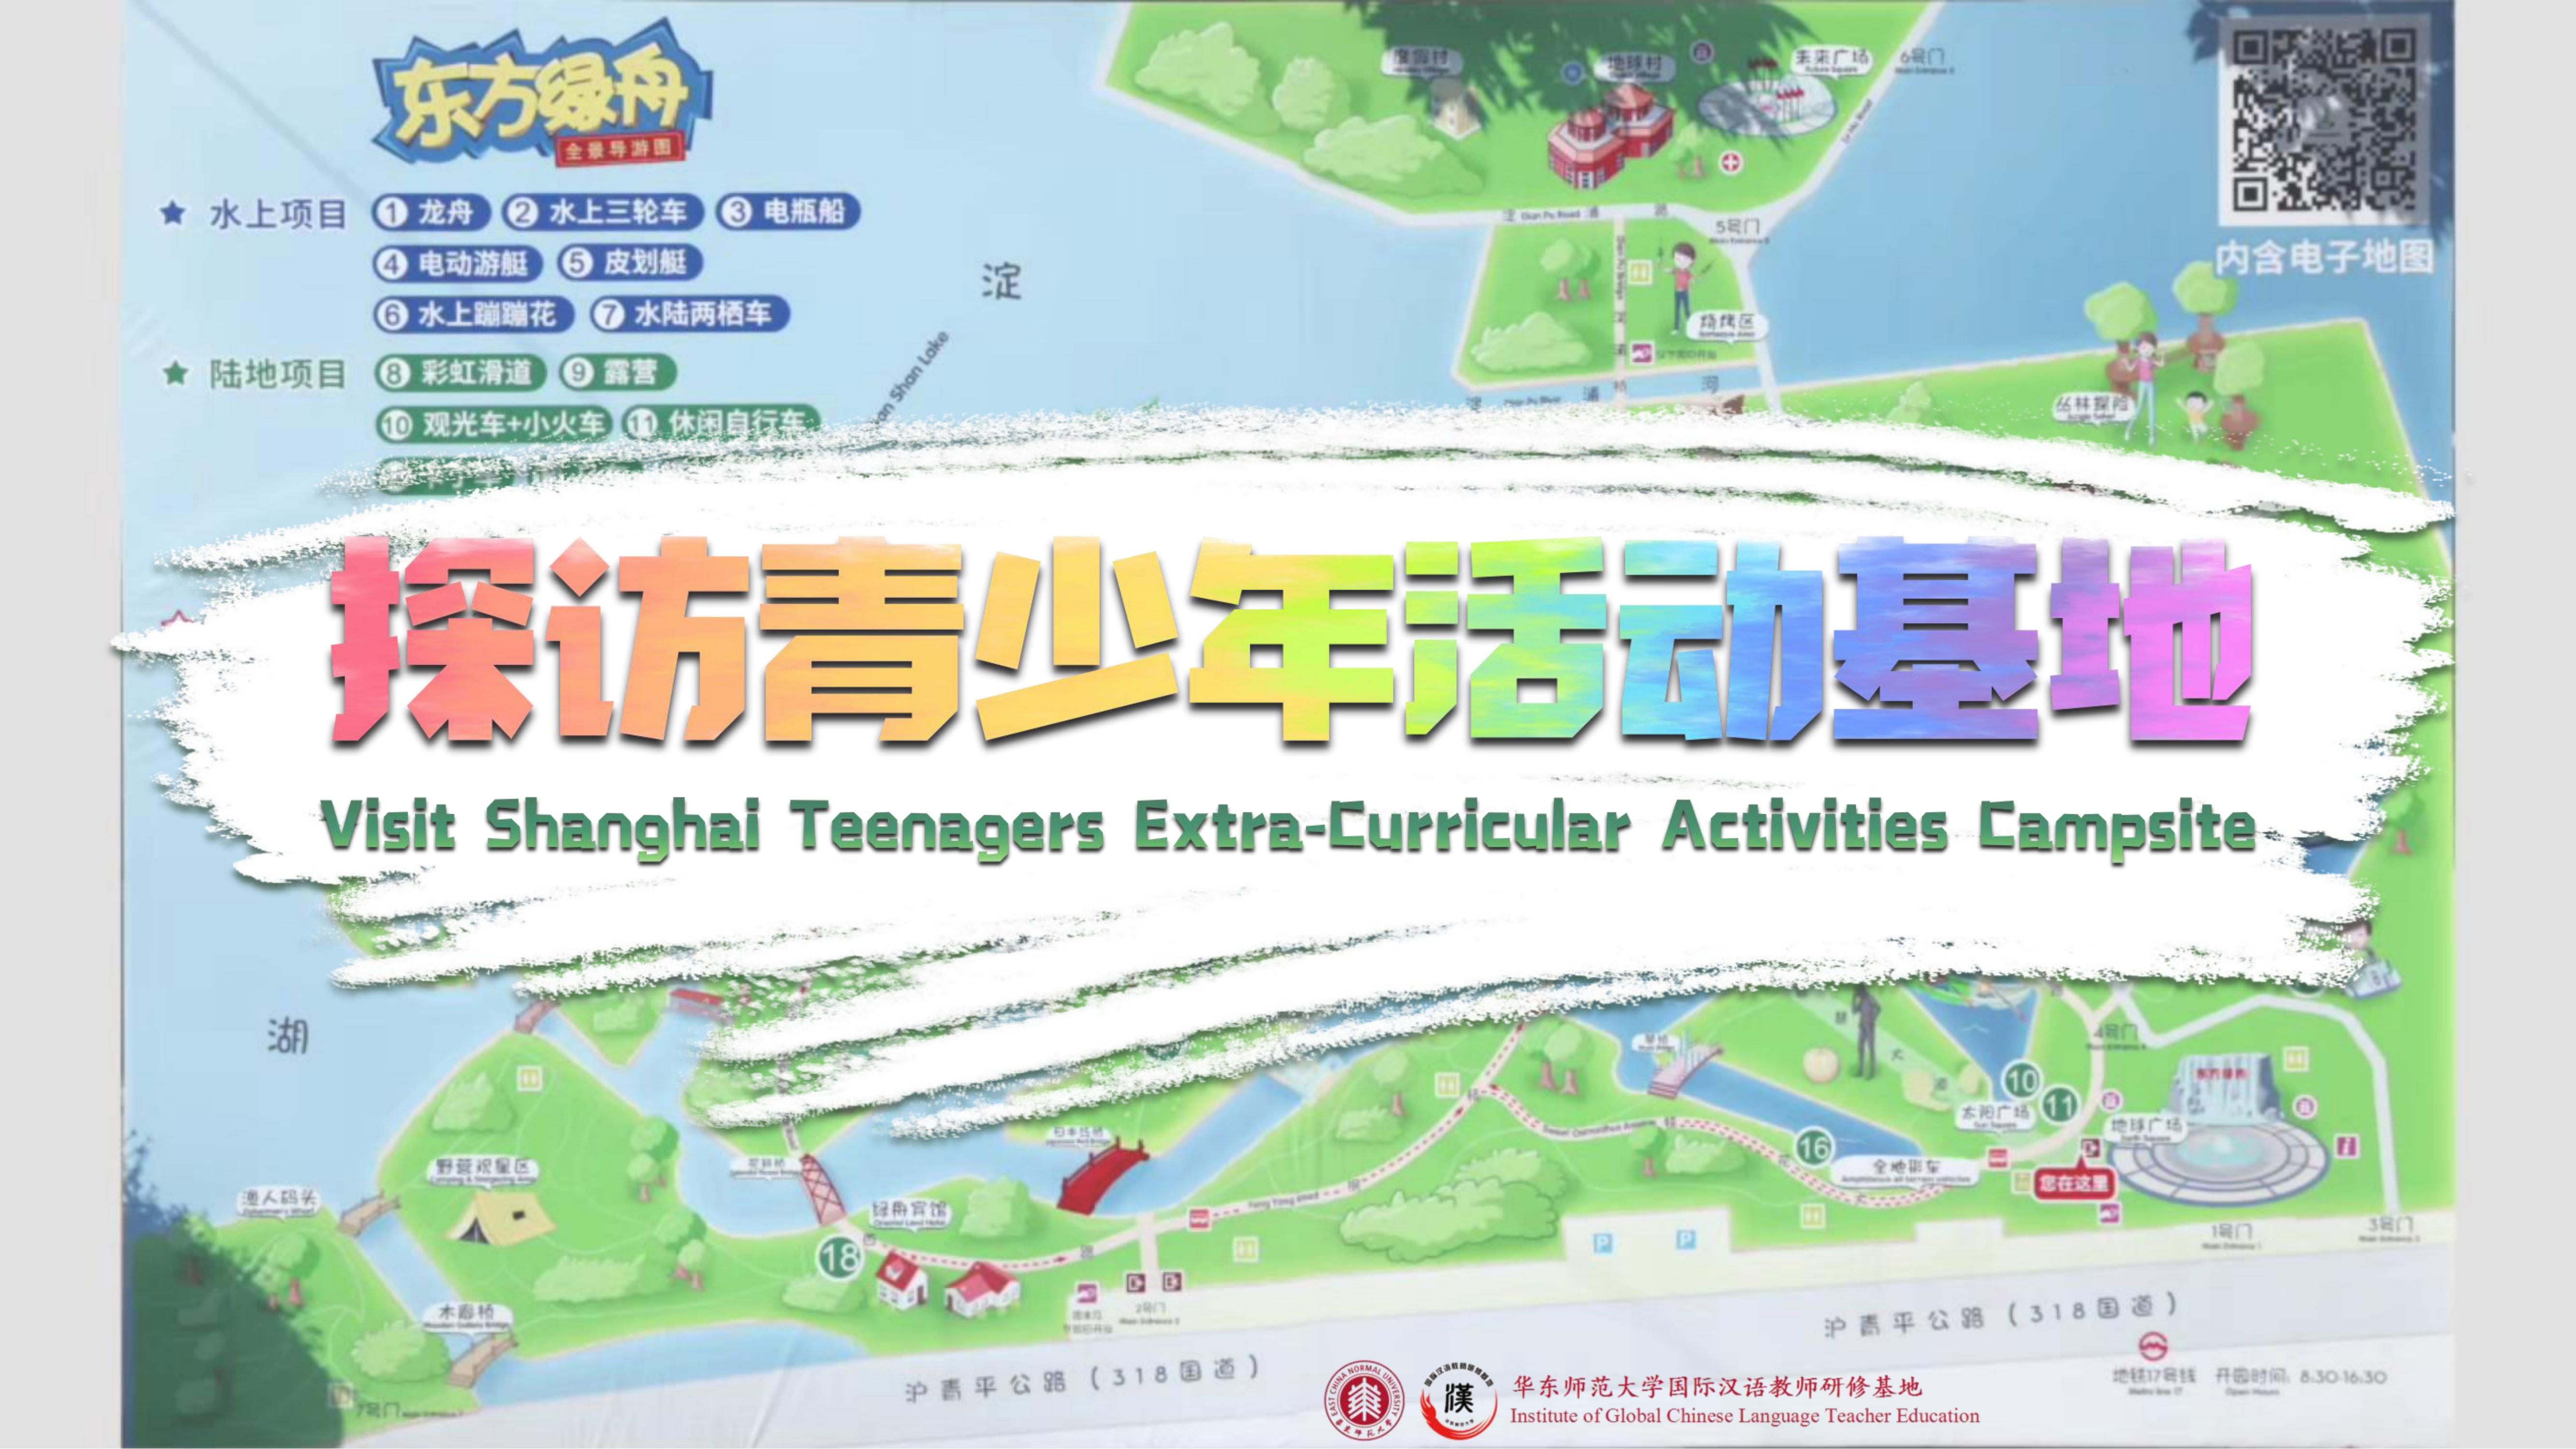 Visit Shanghai Teenagers Extra-Curricular Activities Campsite